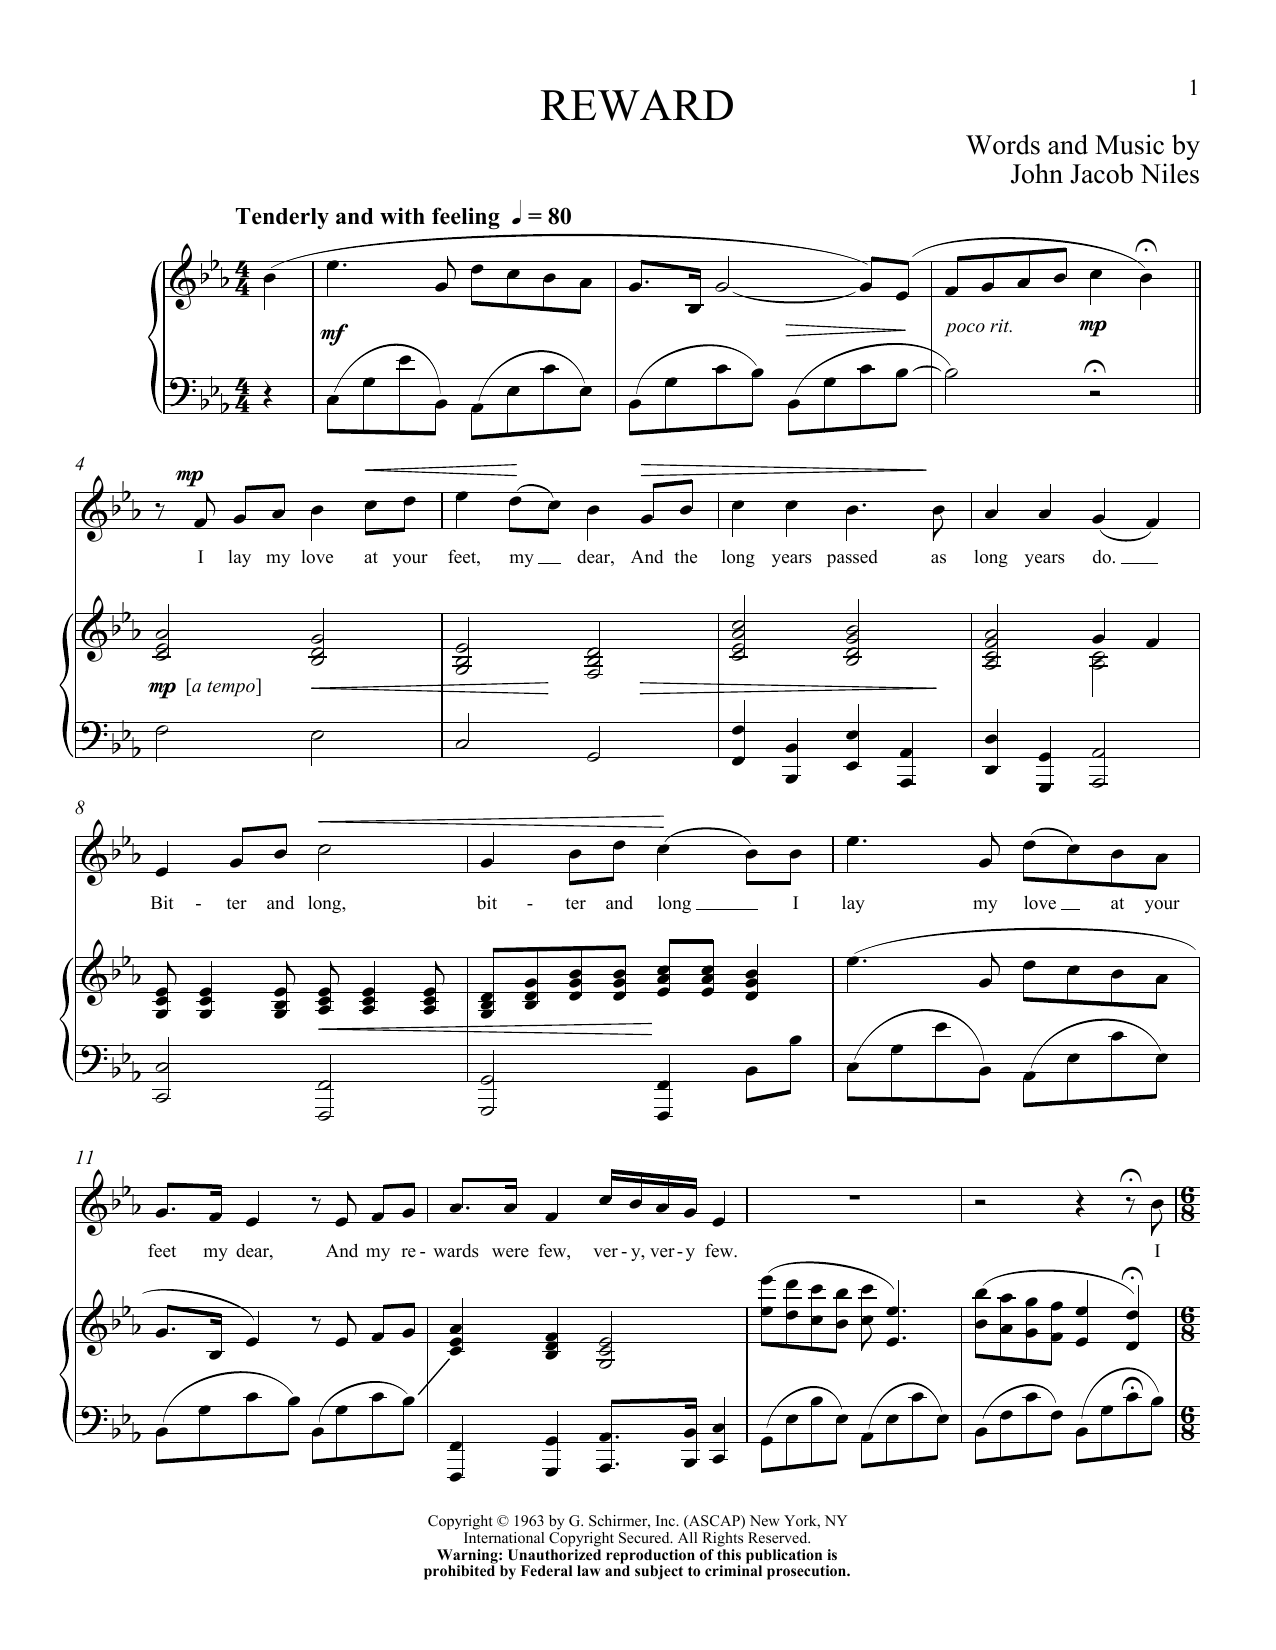 John Jacob Niles Reward Sheet Music Notes & Chords for Piano & Vocal - Download or Print PDF